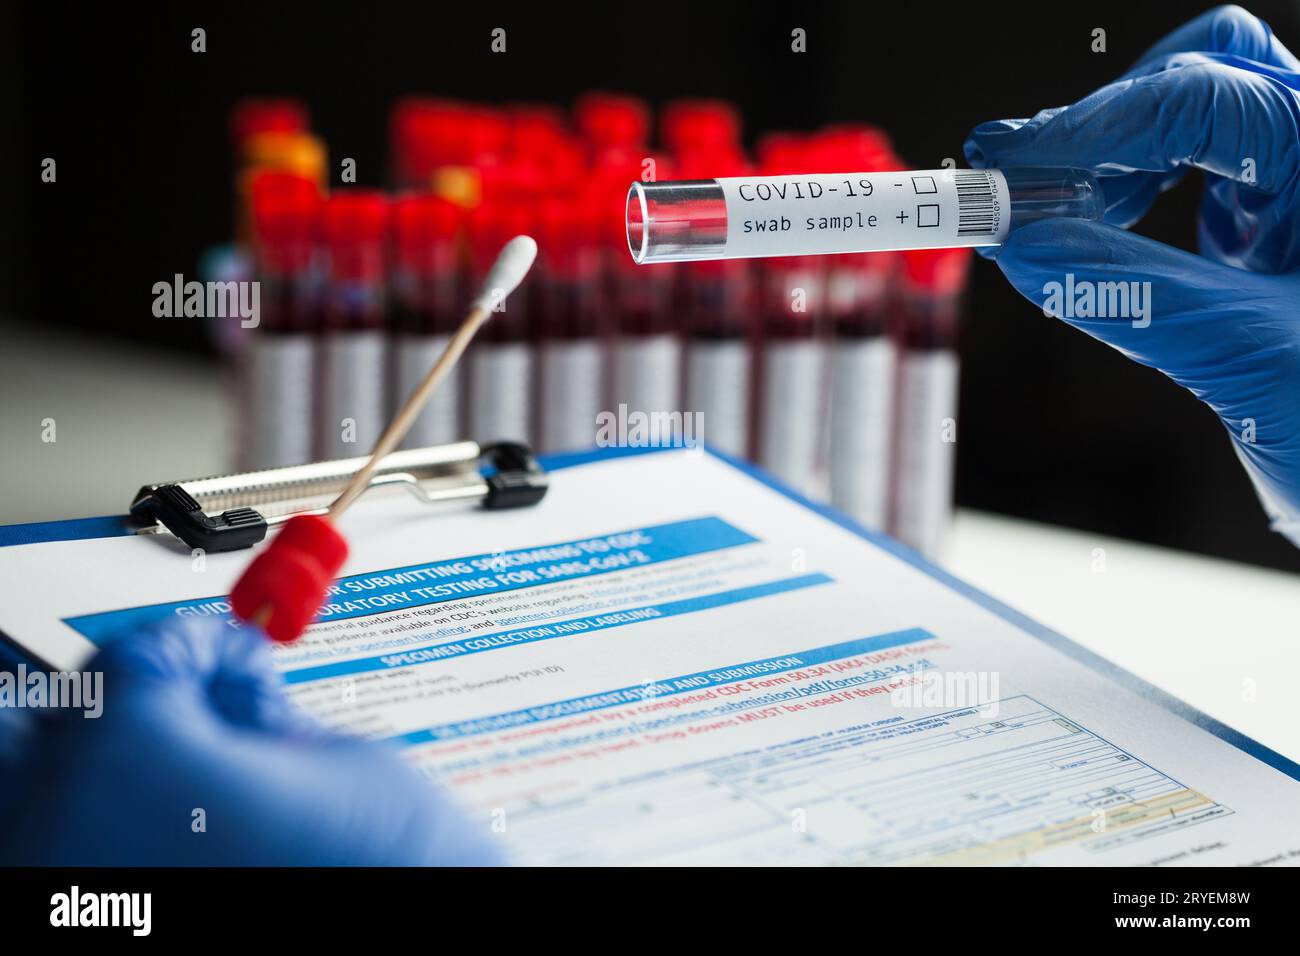 Lab technician holding swab collection kit,Coronavirus COVID-19 specimen collecting equipment,DNA na Stock Photo